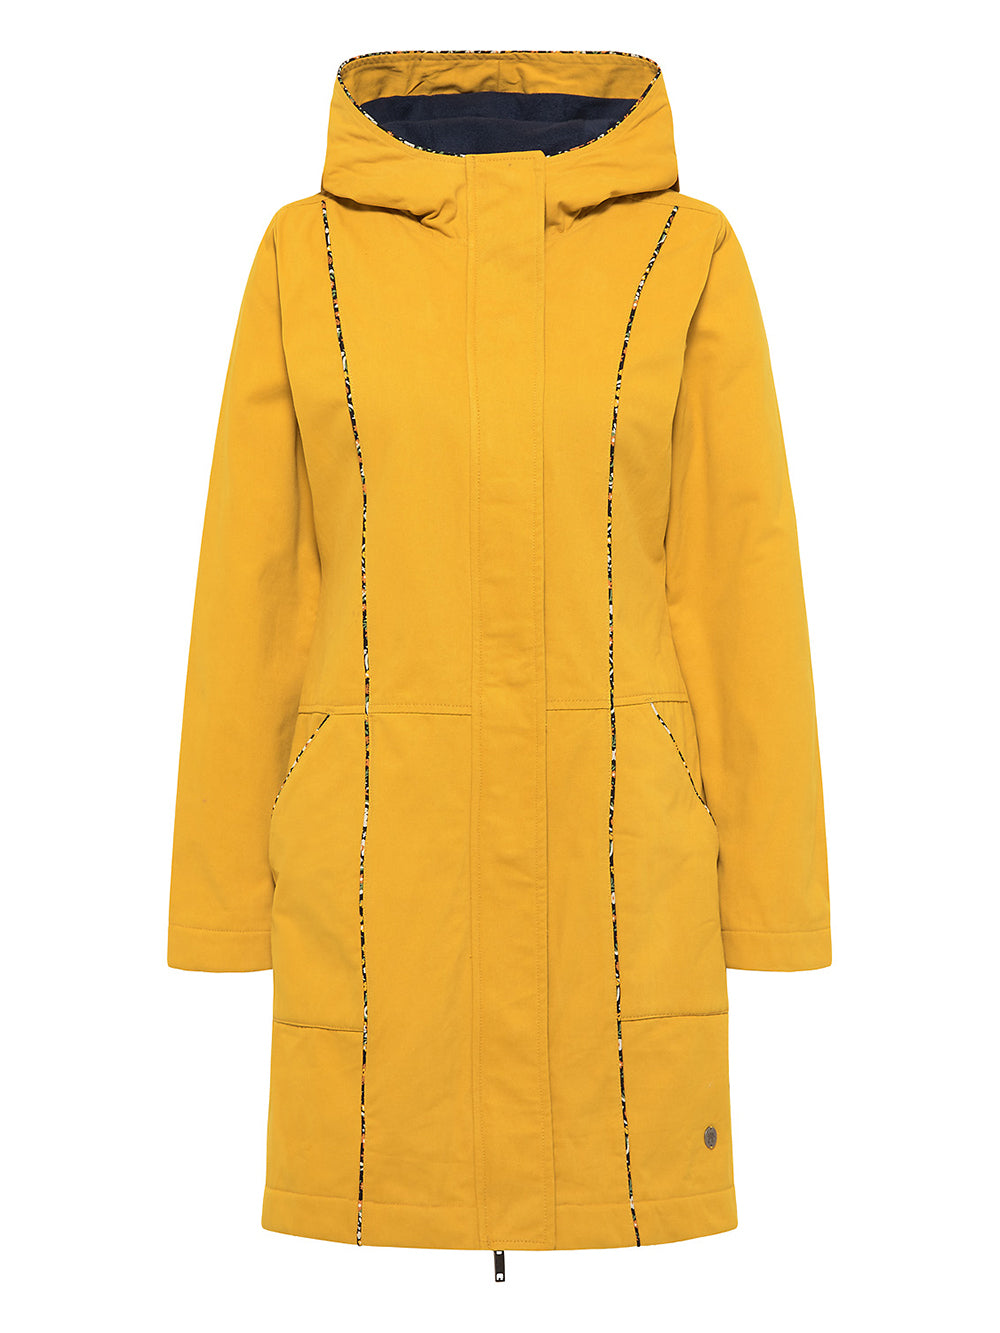 Mustard twill coat